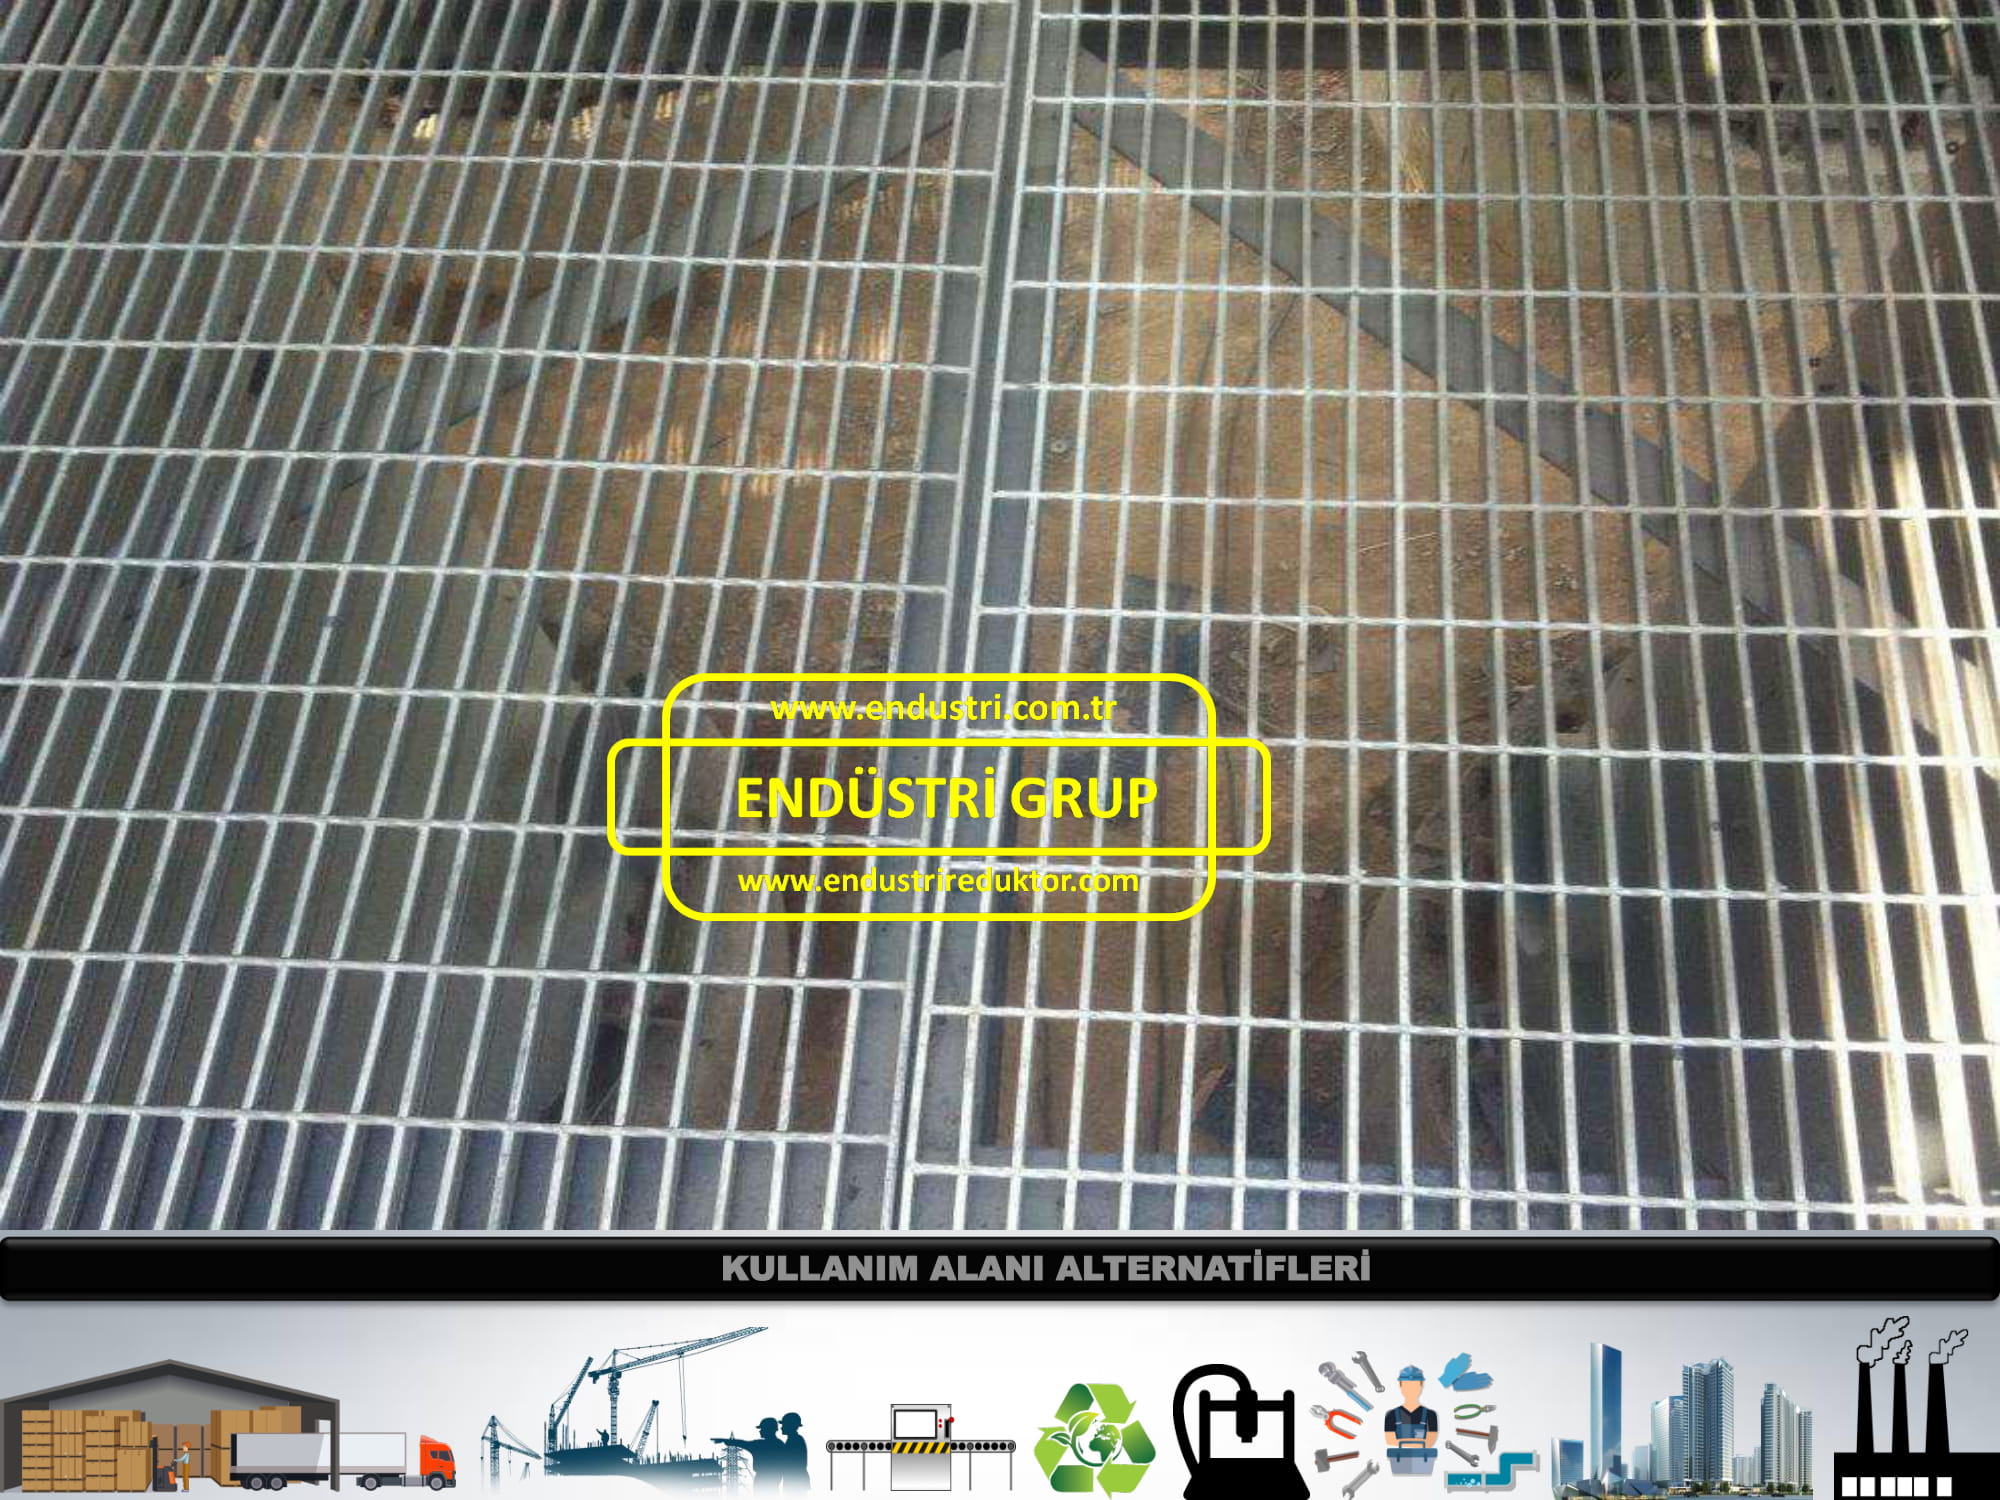 galvanizli-platform-izgaralari-paslanmaz-petek-izgarasi-basamak-metal-celik-izgara